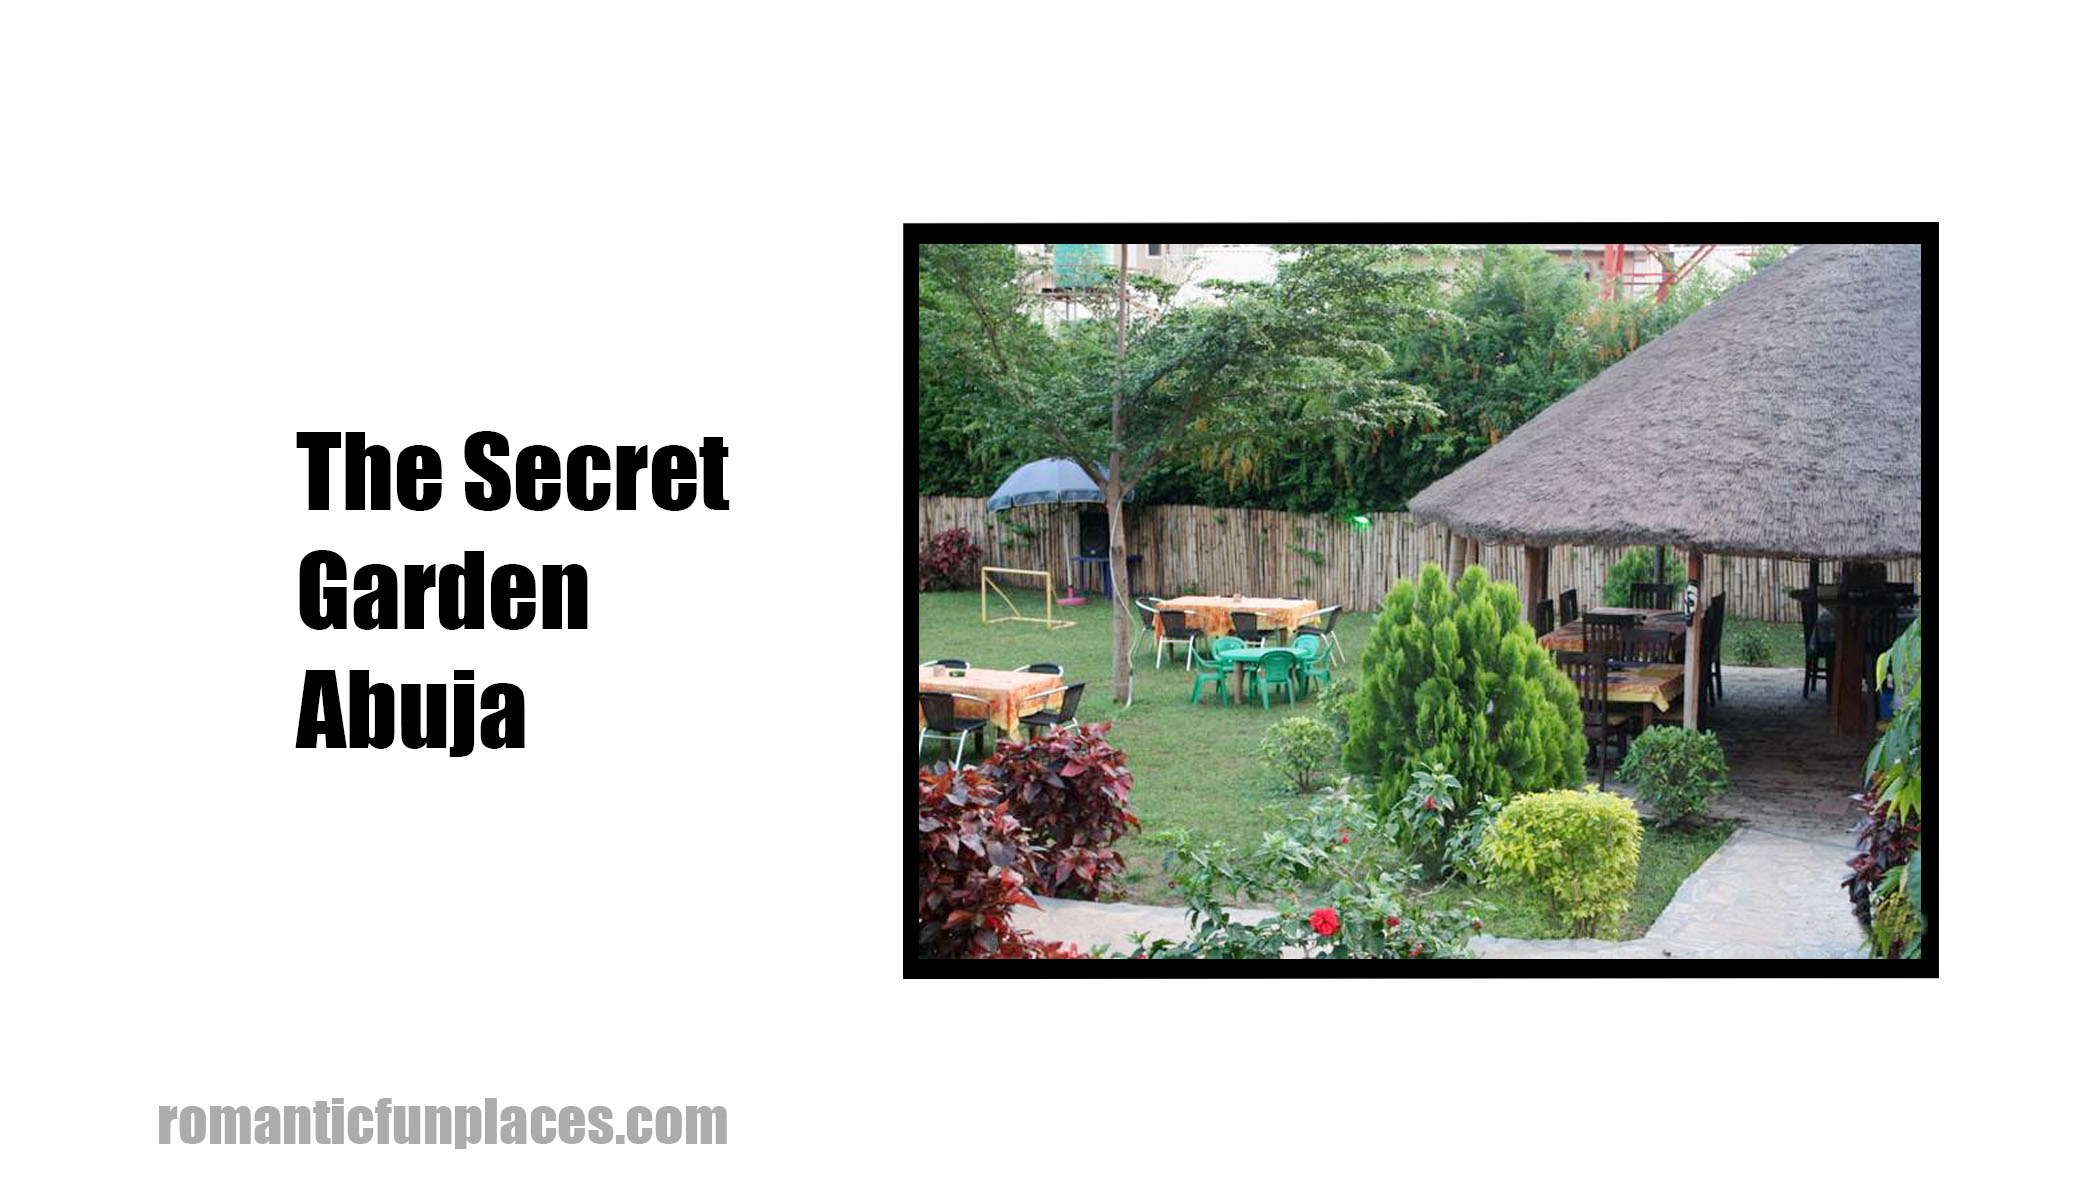 The Secret Garden Abuja